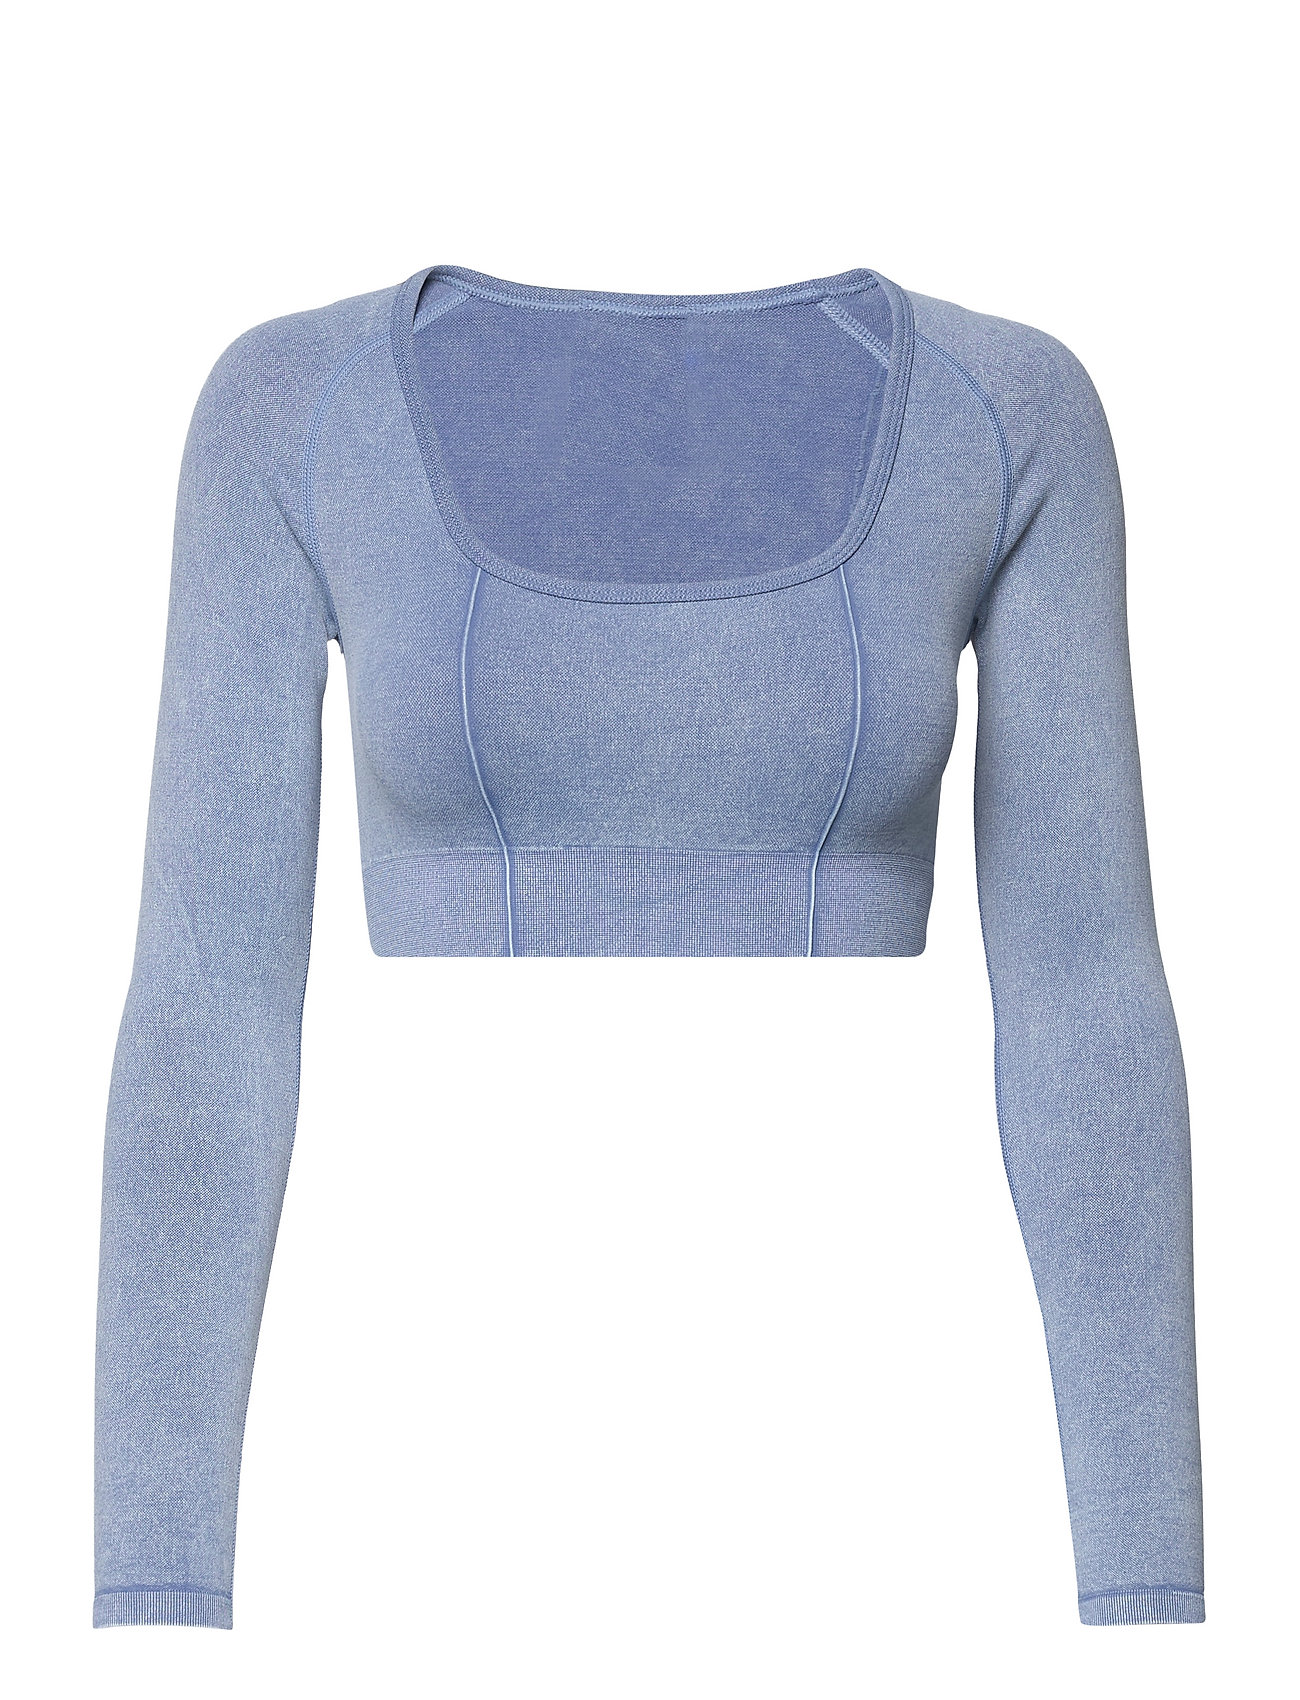 Washed Denim Seamless Cropped Long Sleeve Sport Crop Tops Long-sleeved Crop Tops Blue AIM'N